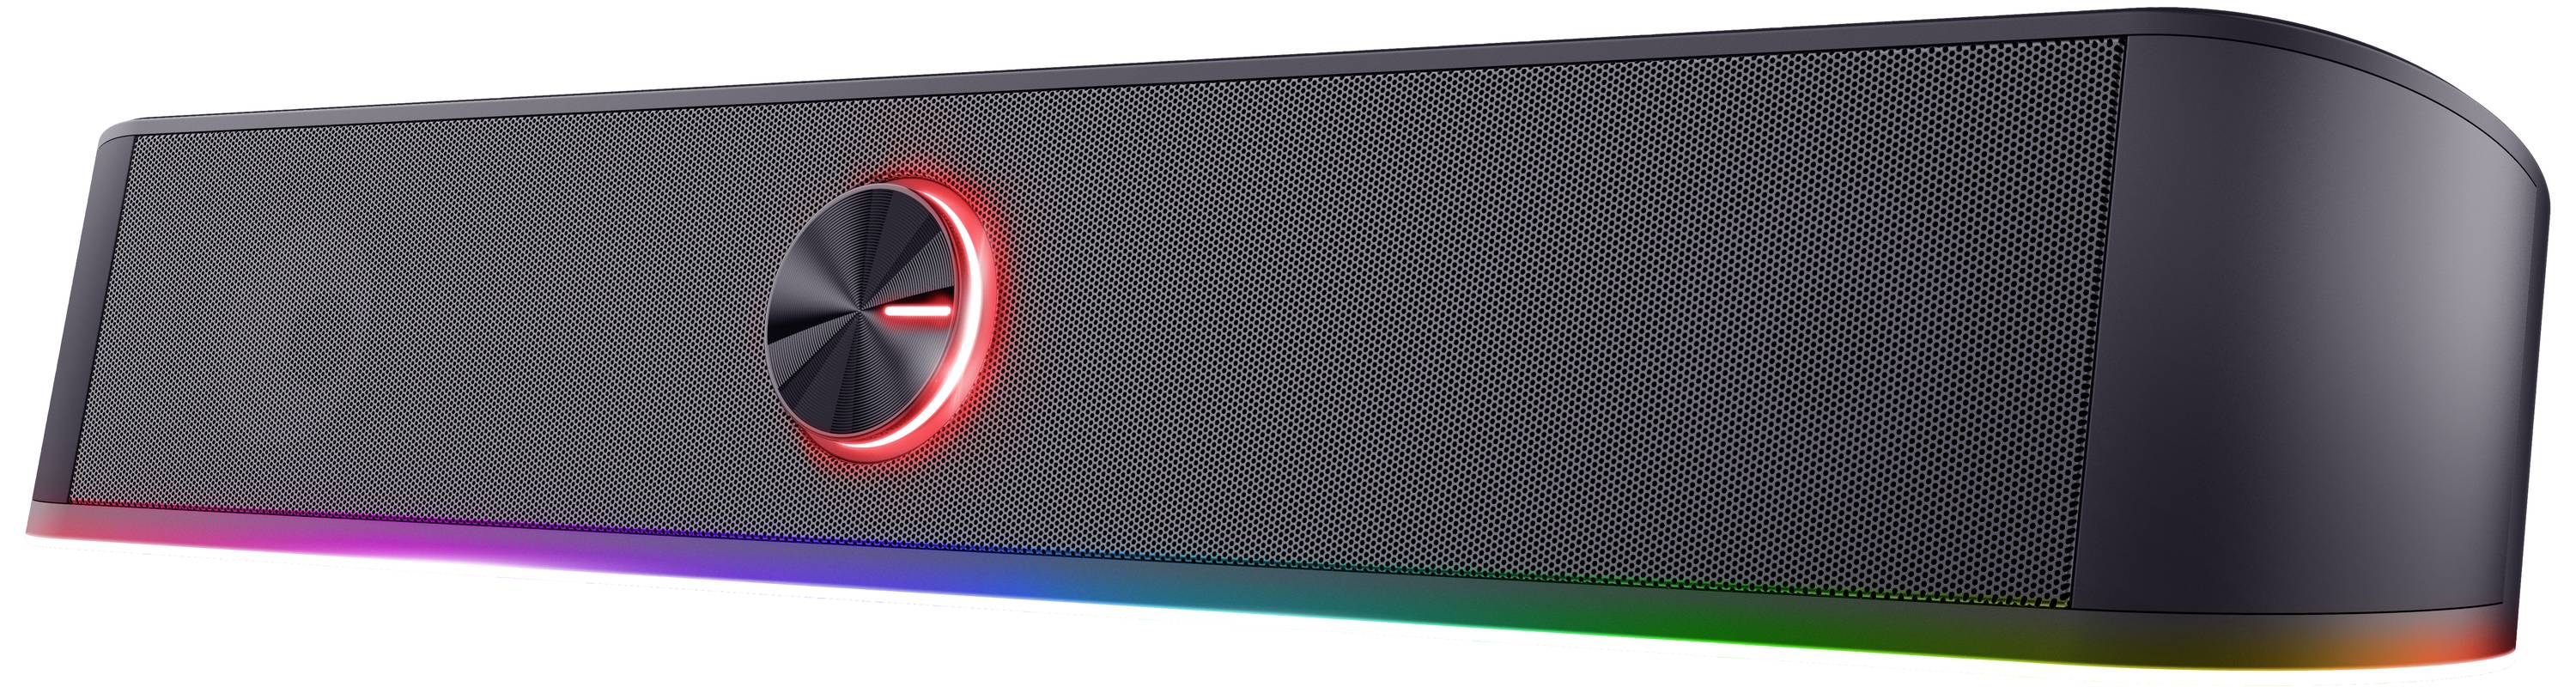 TRUST Gaming GXT 619 Thorne RGB Illuminated Soundbar, Stereo-Soundbar mit RGB-Beleuchtung und platzs